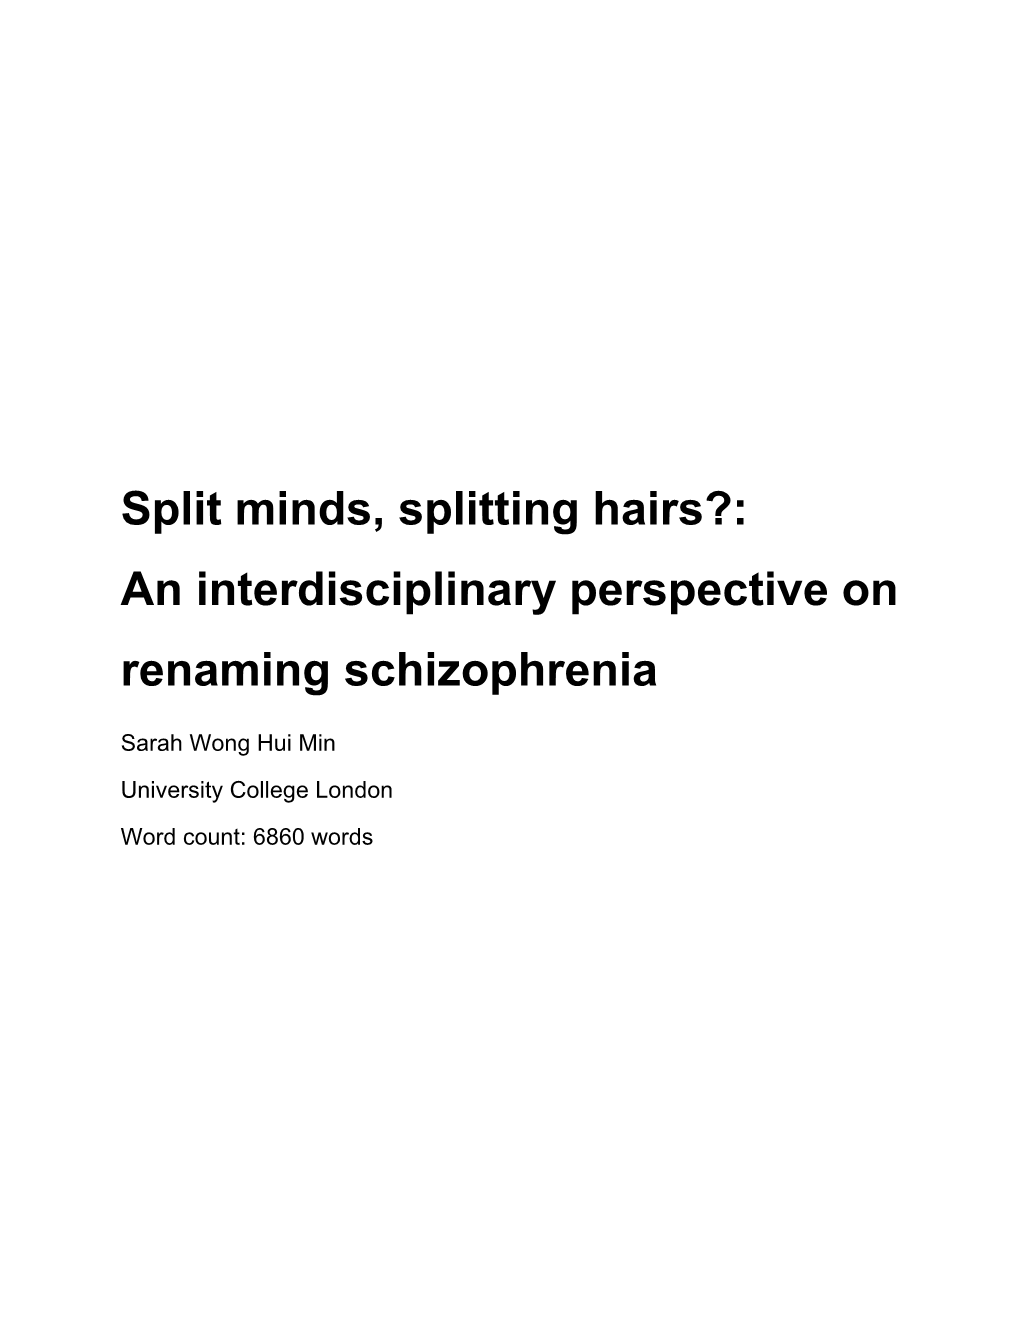 An Interdisciplinary Perspective on Renaming Schizophrenia